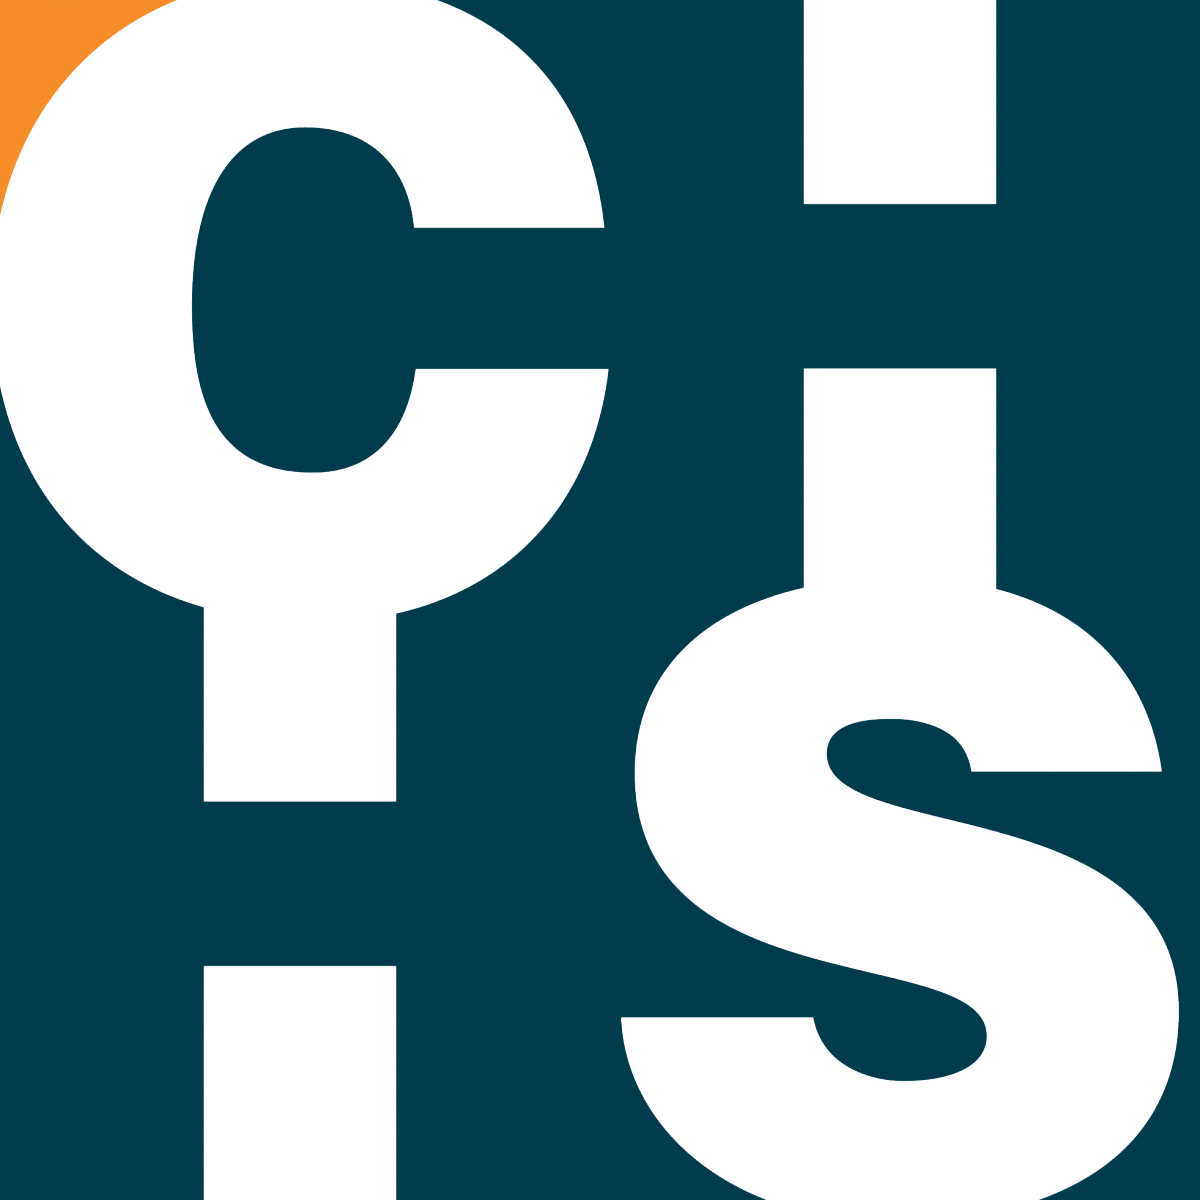 CHHS Logo